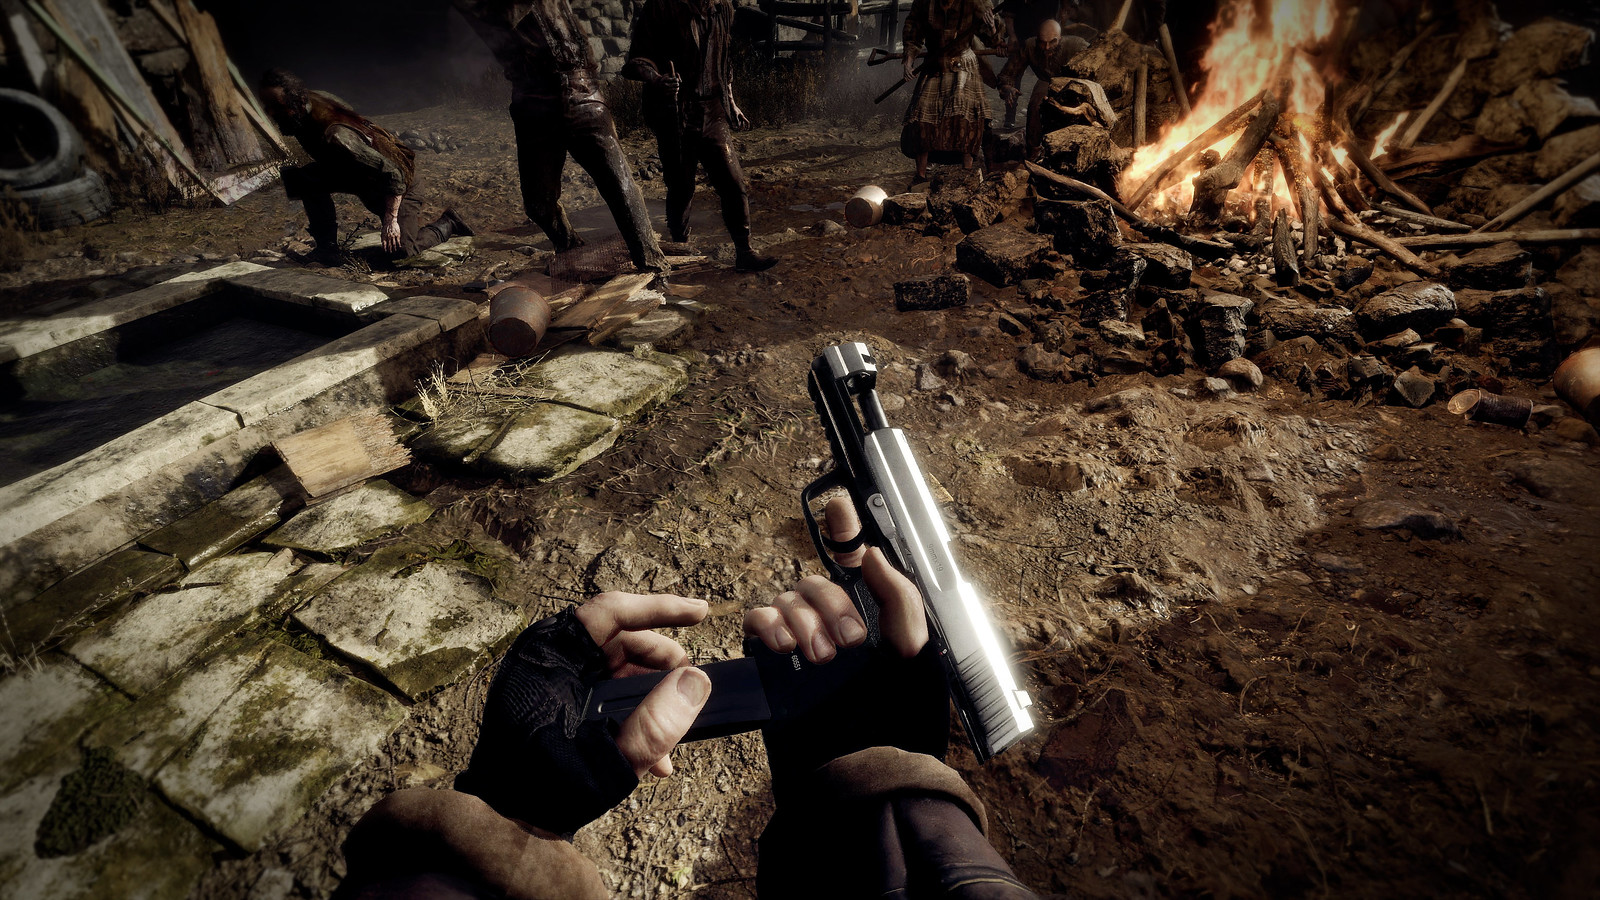 Capcom reveals Resident Evil 4 Remake PC specifications - Xfire